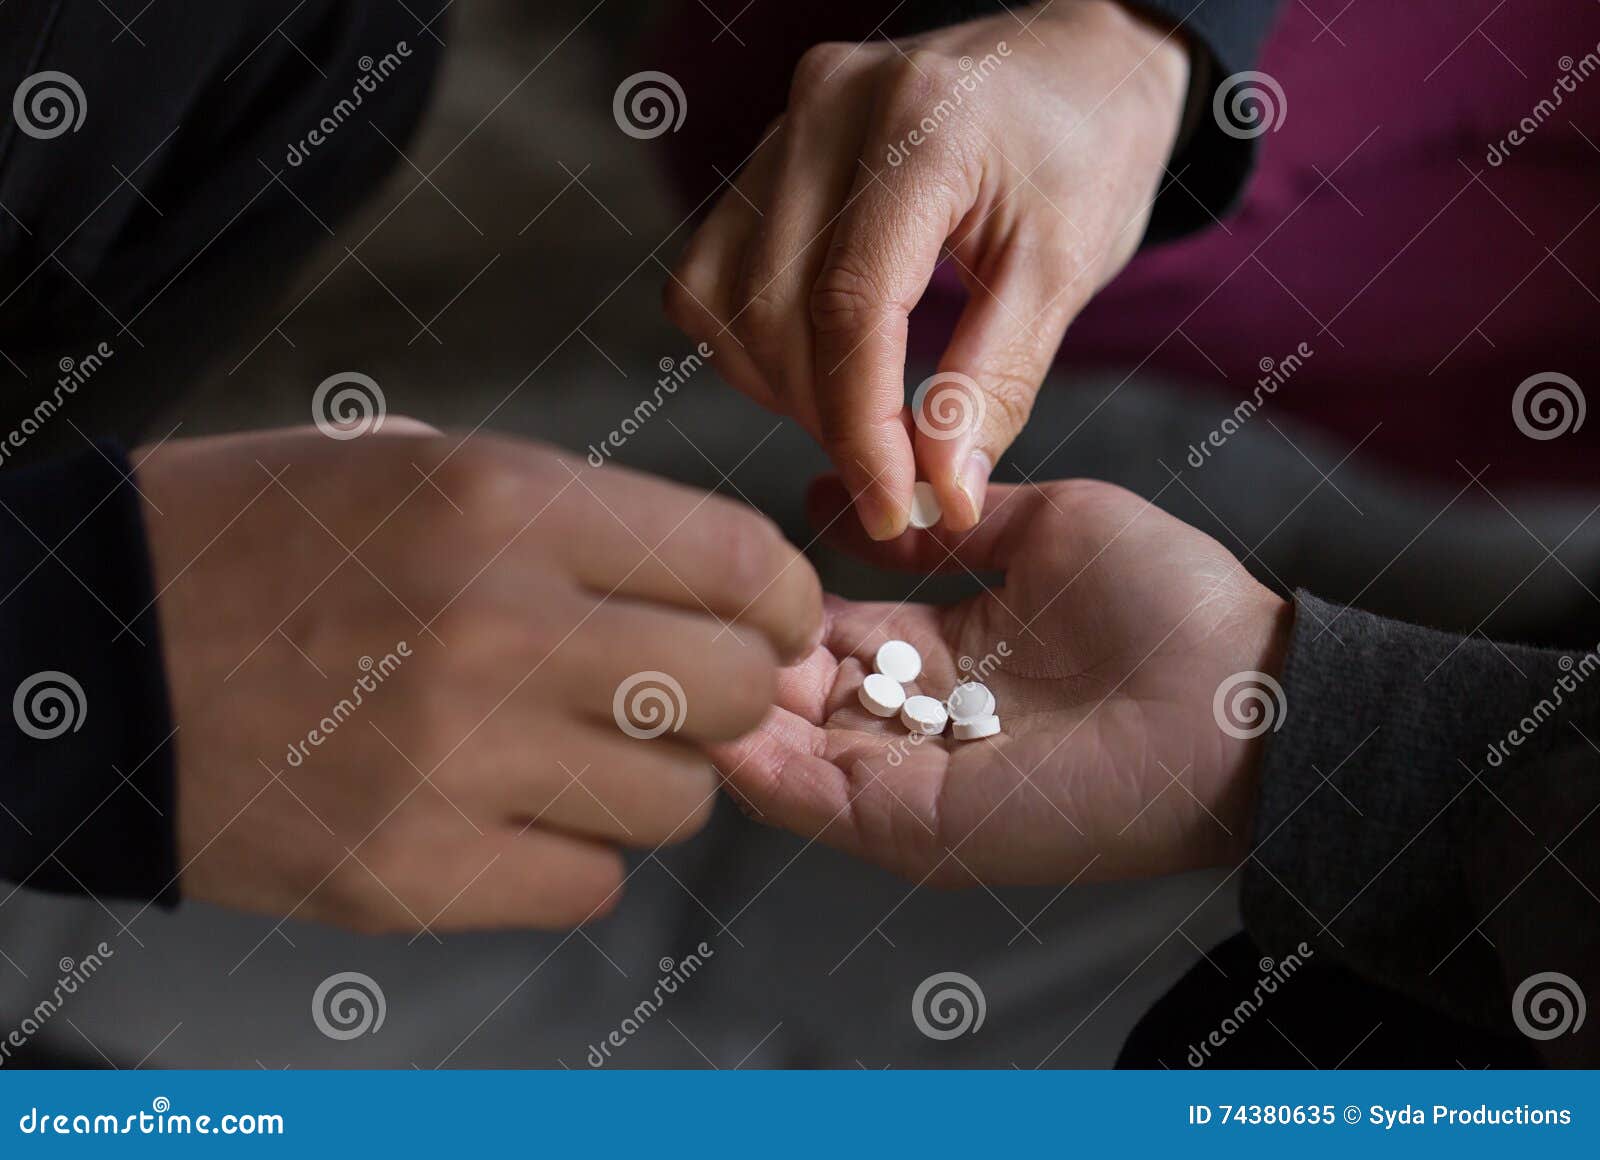 close up of addicts using drug pills